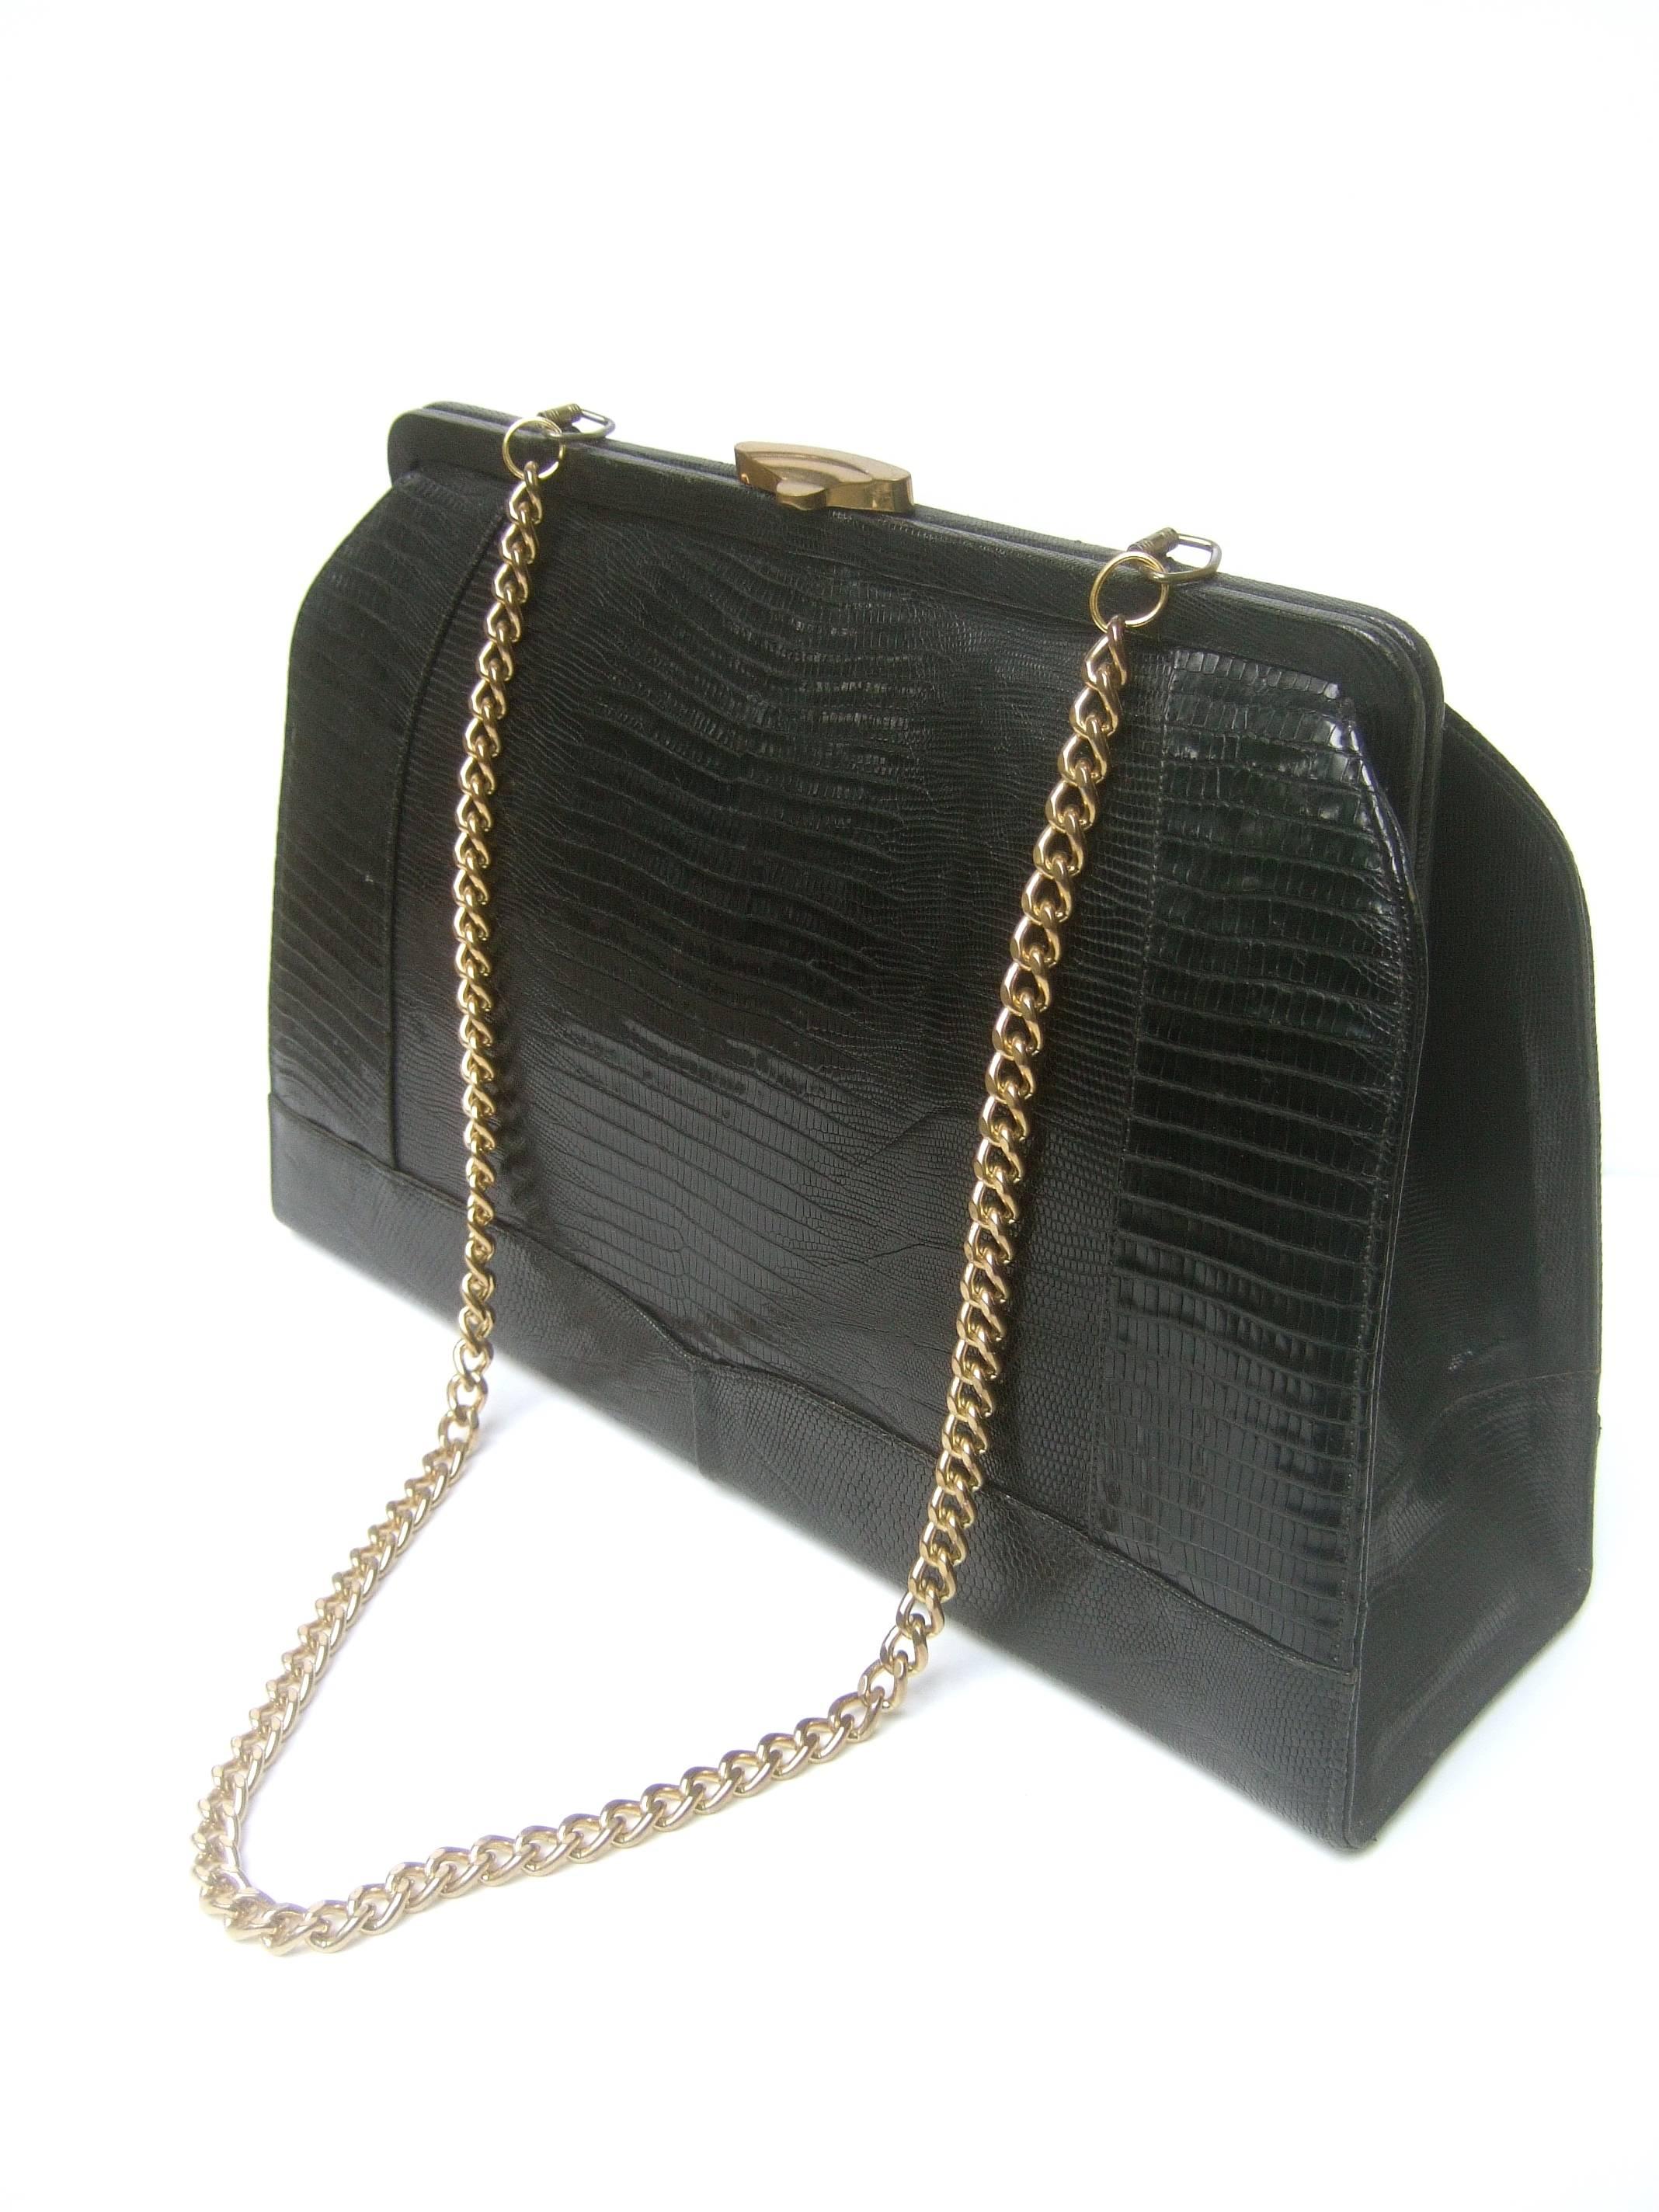 Women's Sleek Ebony Lizard Skin Structured Handbag c 1960